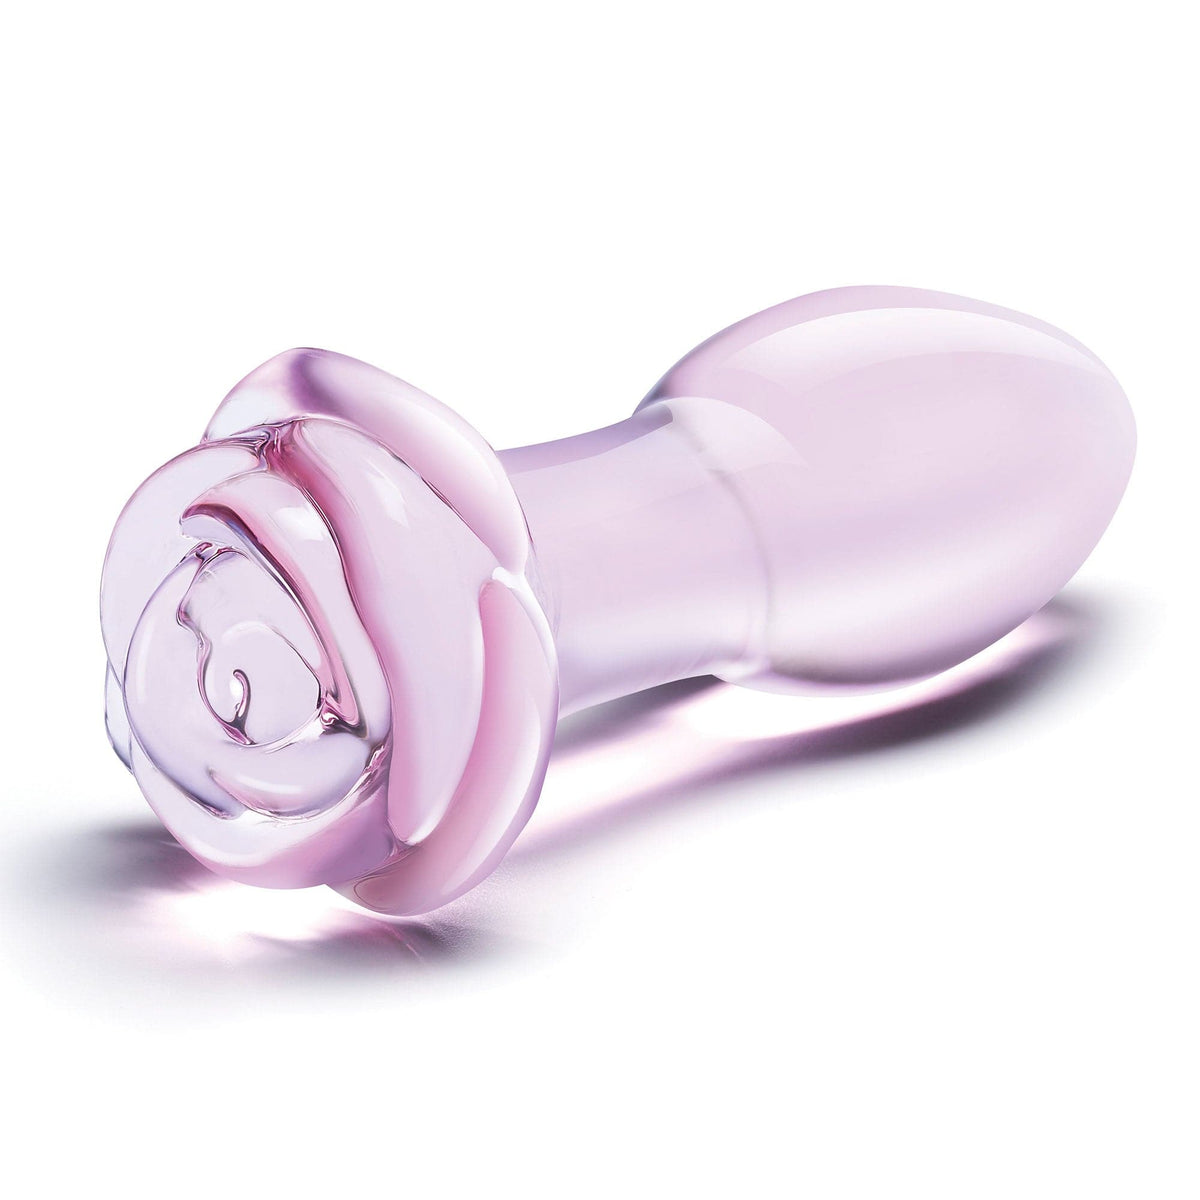 5 inch rosebud glass butt plug pink